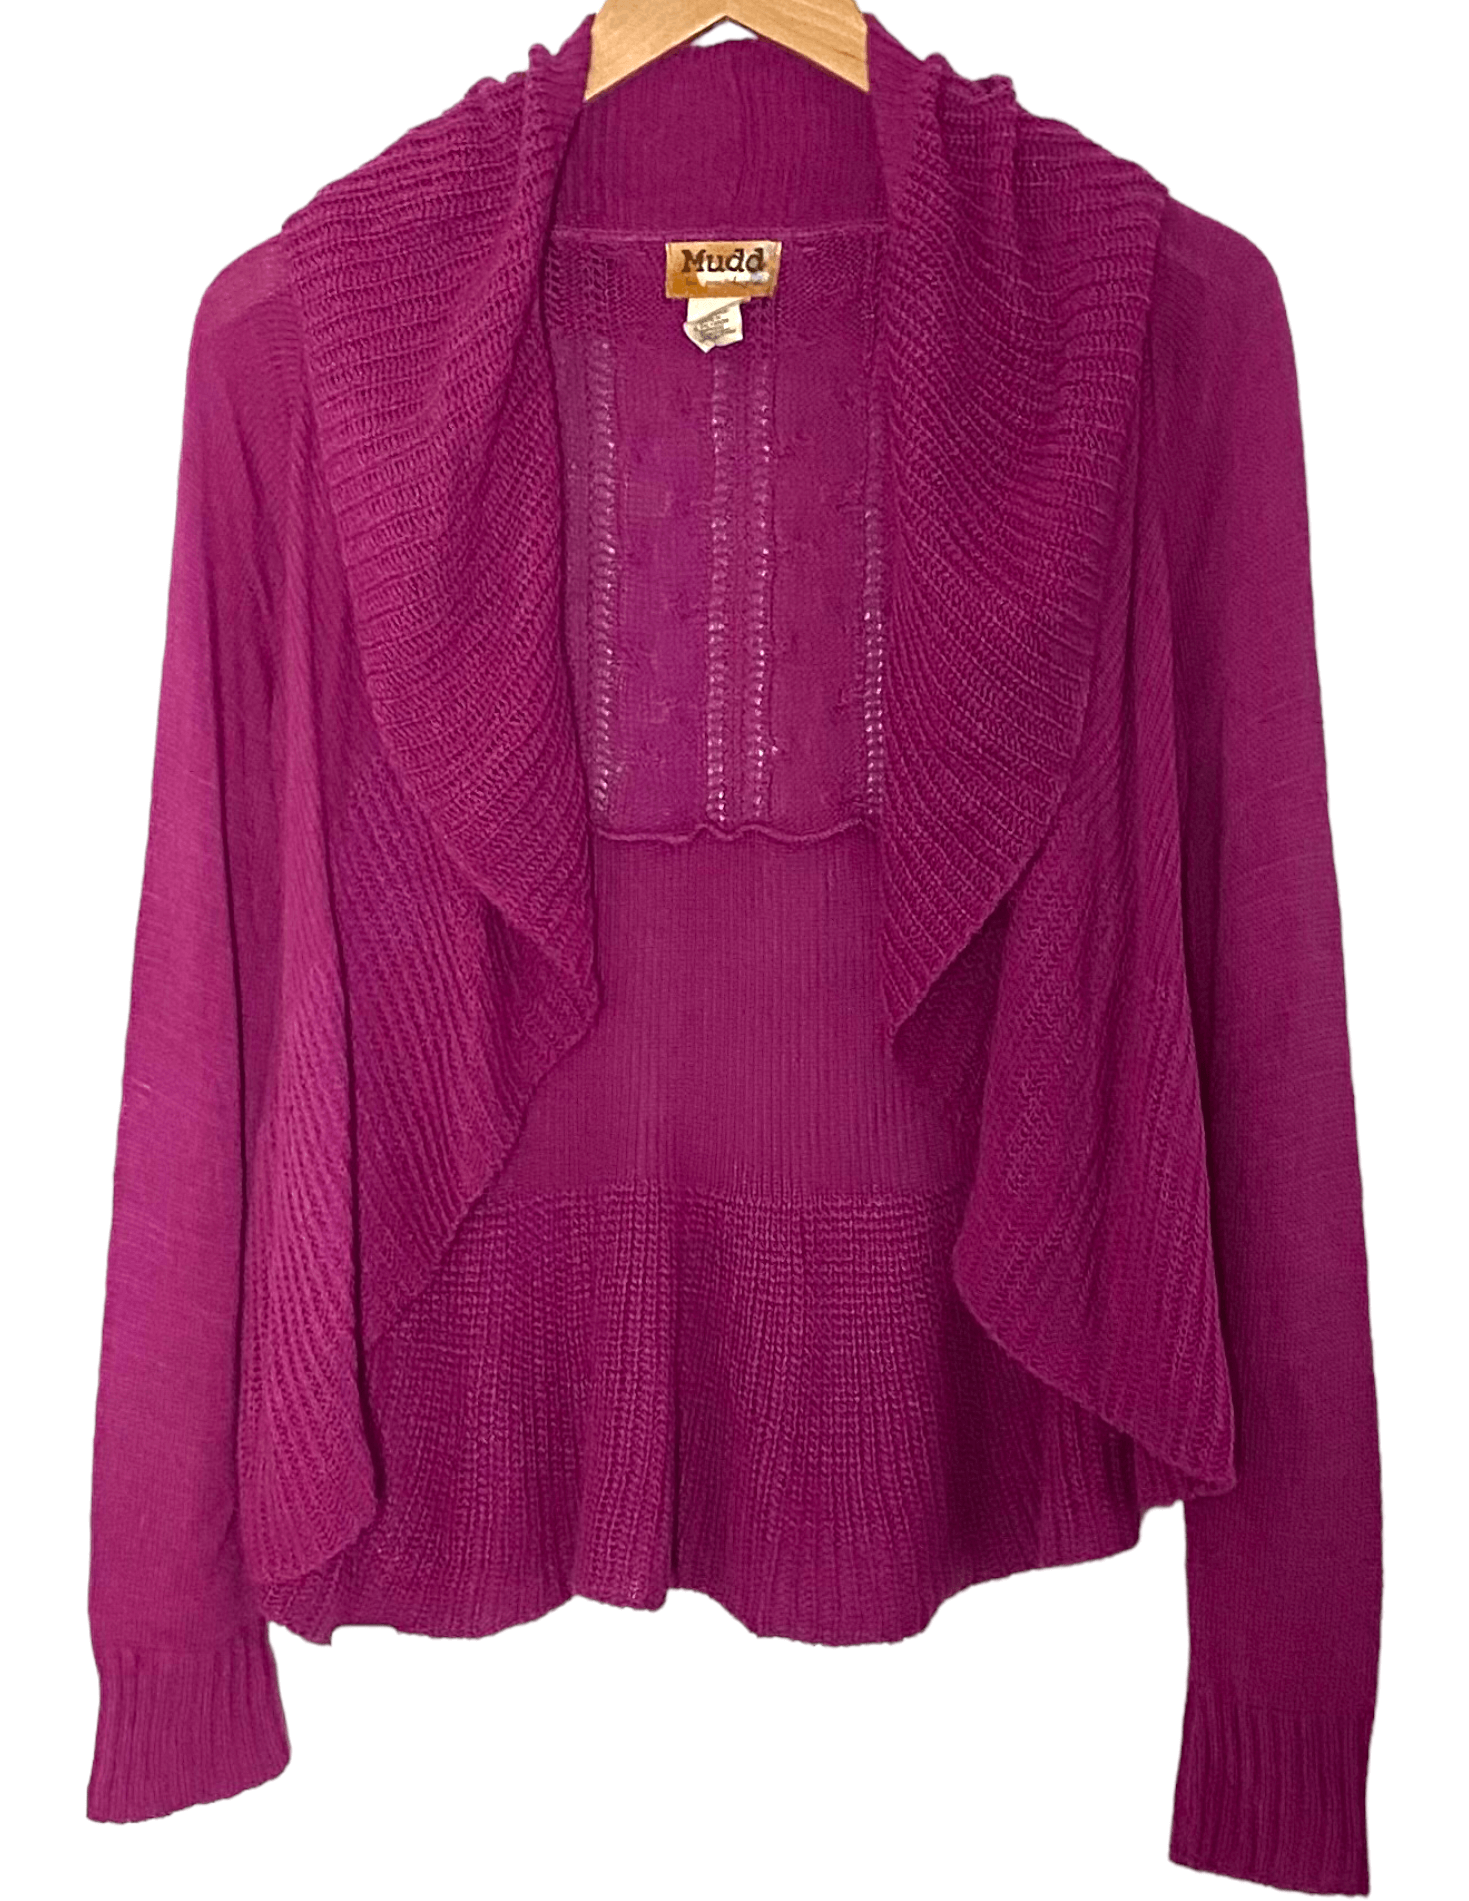 Cool Winter MUDD plum purple cable knit peplum open cardigan sweater